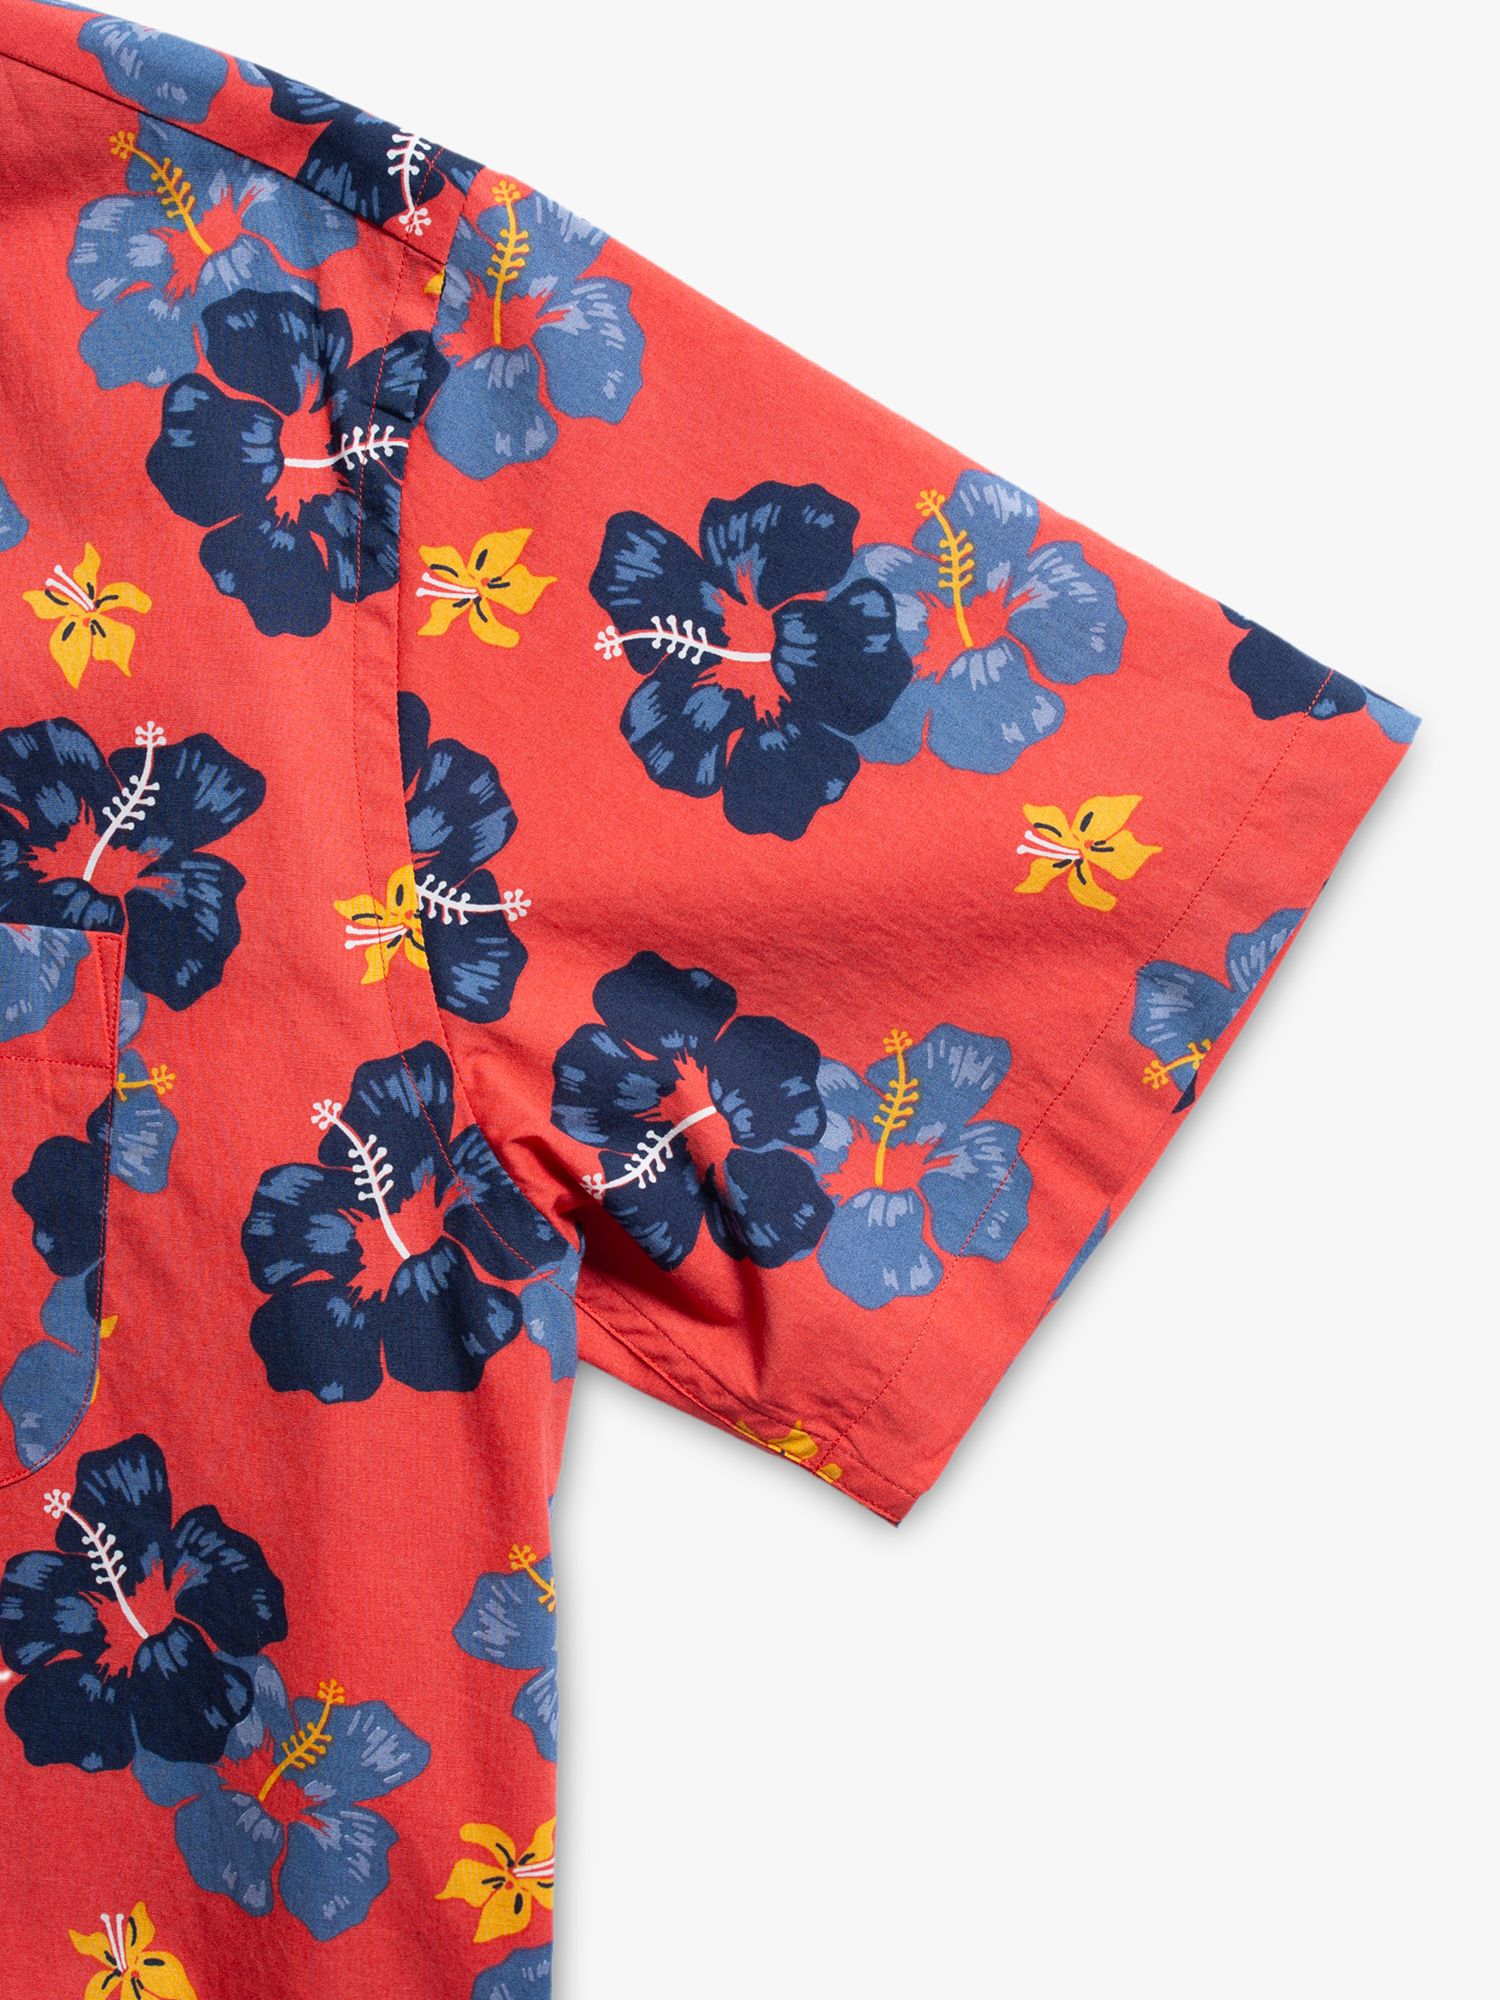 Nudie Jeans Arthur Flower Shirt, Red/Multi, L